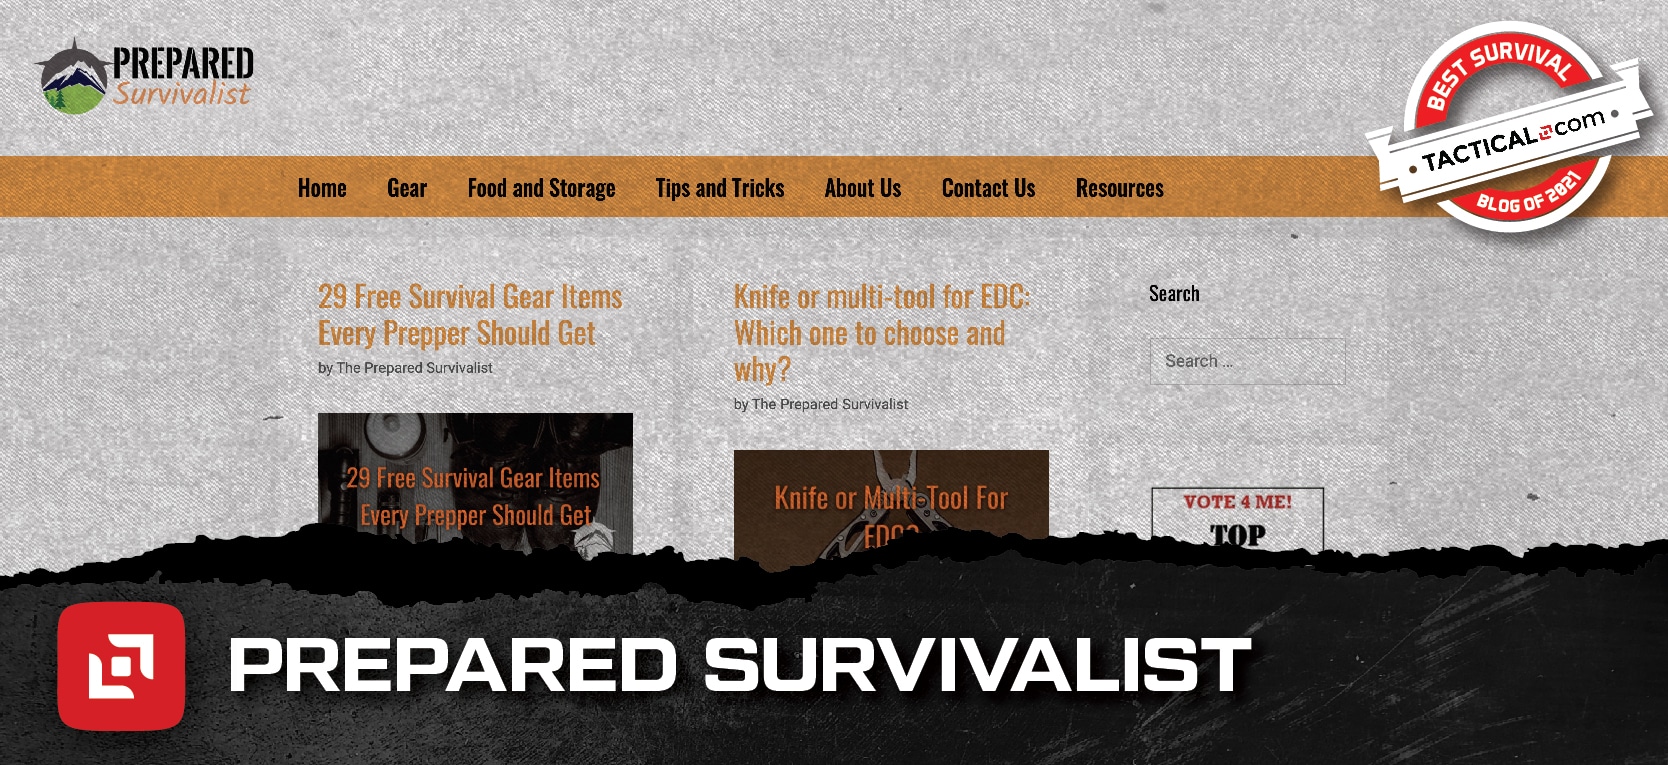 The Prepared Survivalist homepage